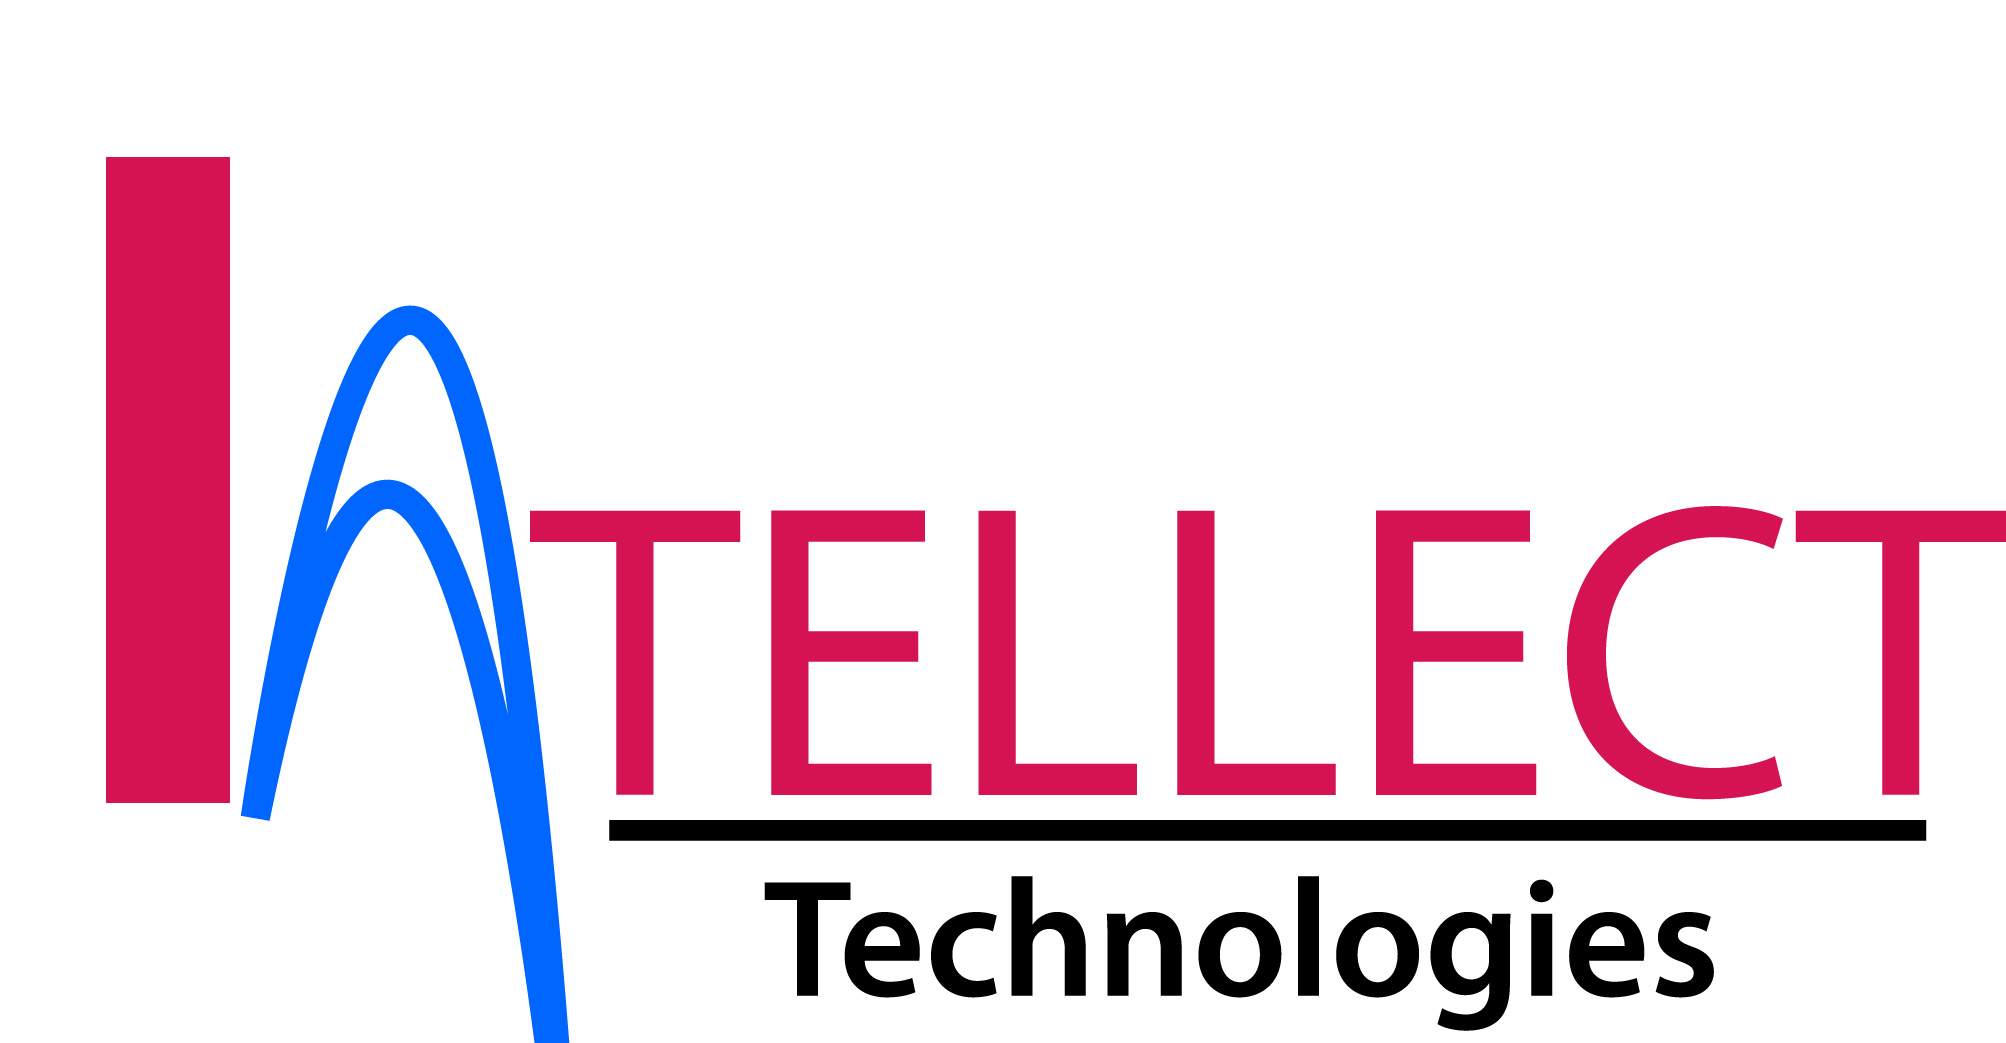 Intellect_Logo